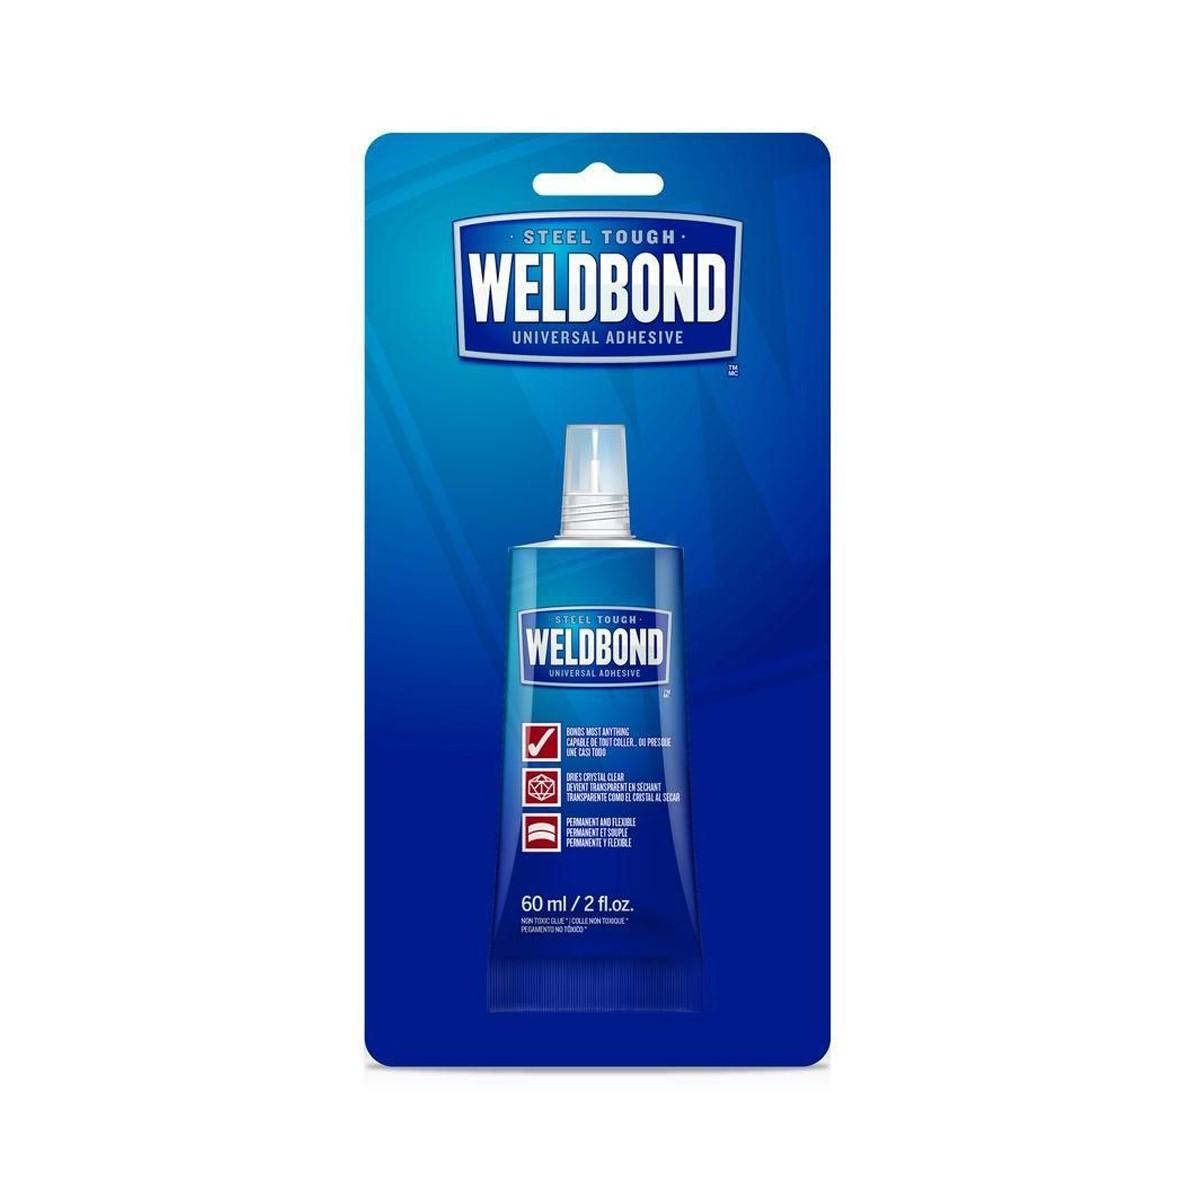 Weldbond Adhesive - 2oz tube Lowest Price - many uses!